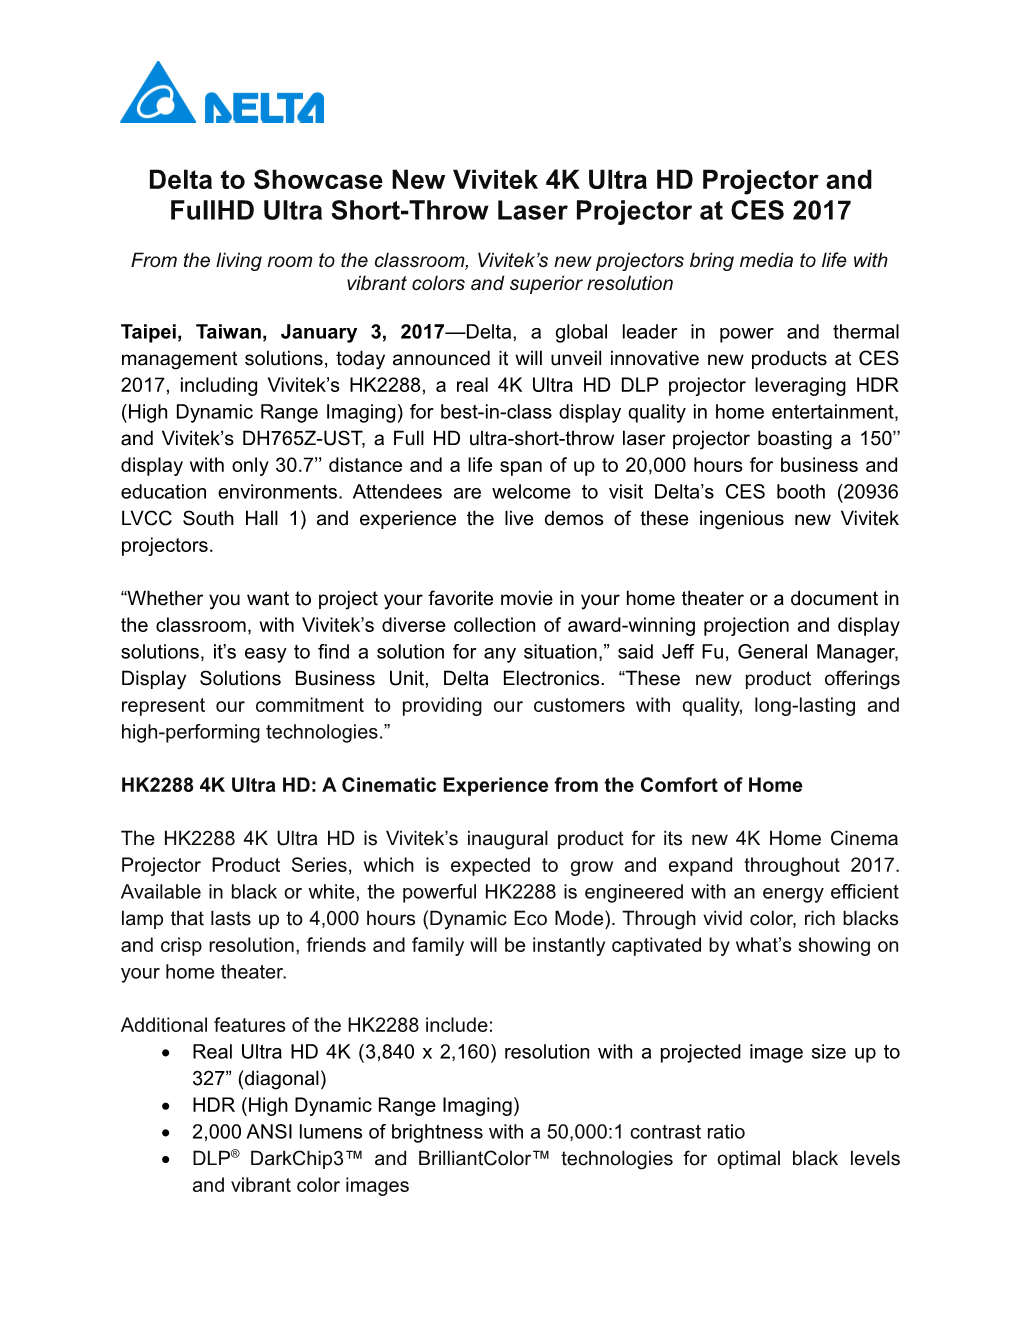 Delta to Showcase New Vivitek 4K Ultra HD Projector and Fullhd Ultra Short-Throw Laser